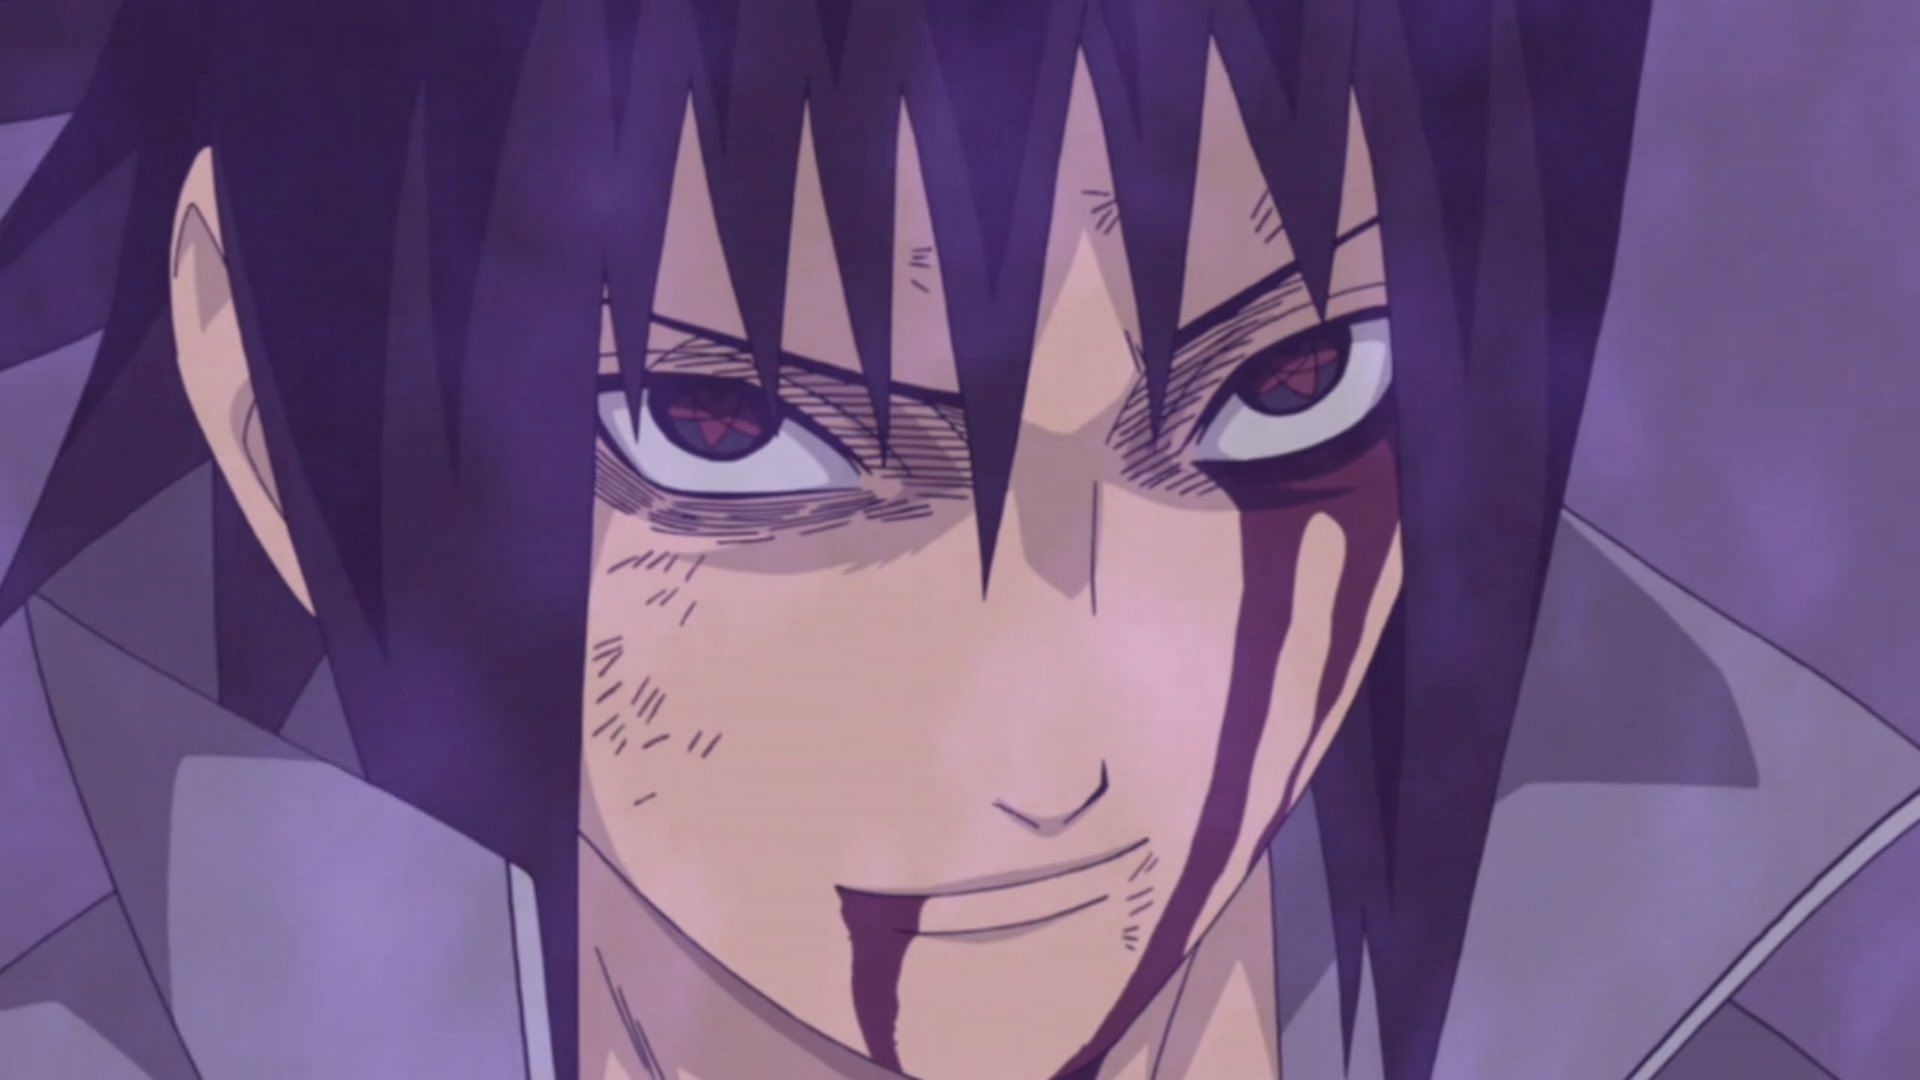 Sasuke as seen in the anime series (Image via Pierrot)